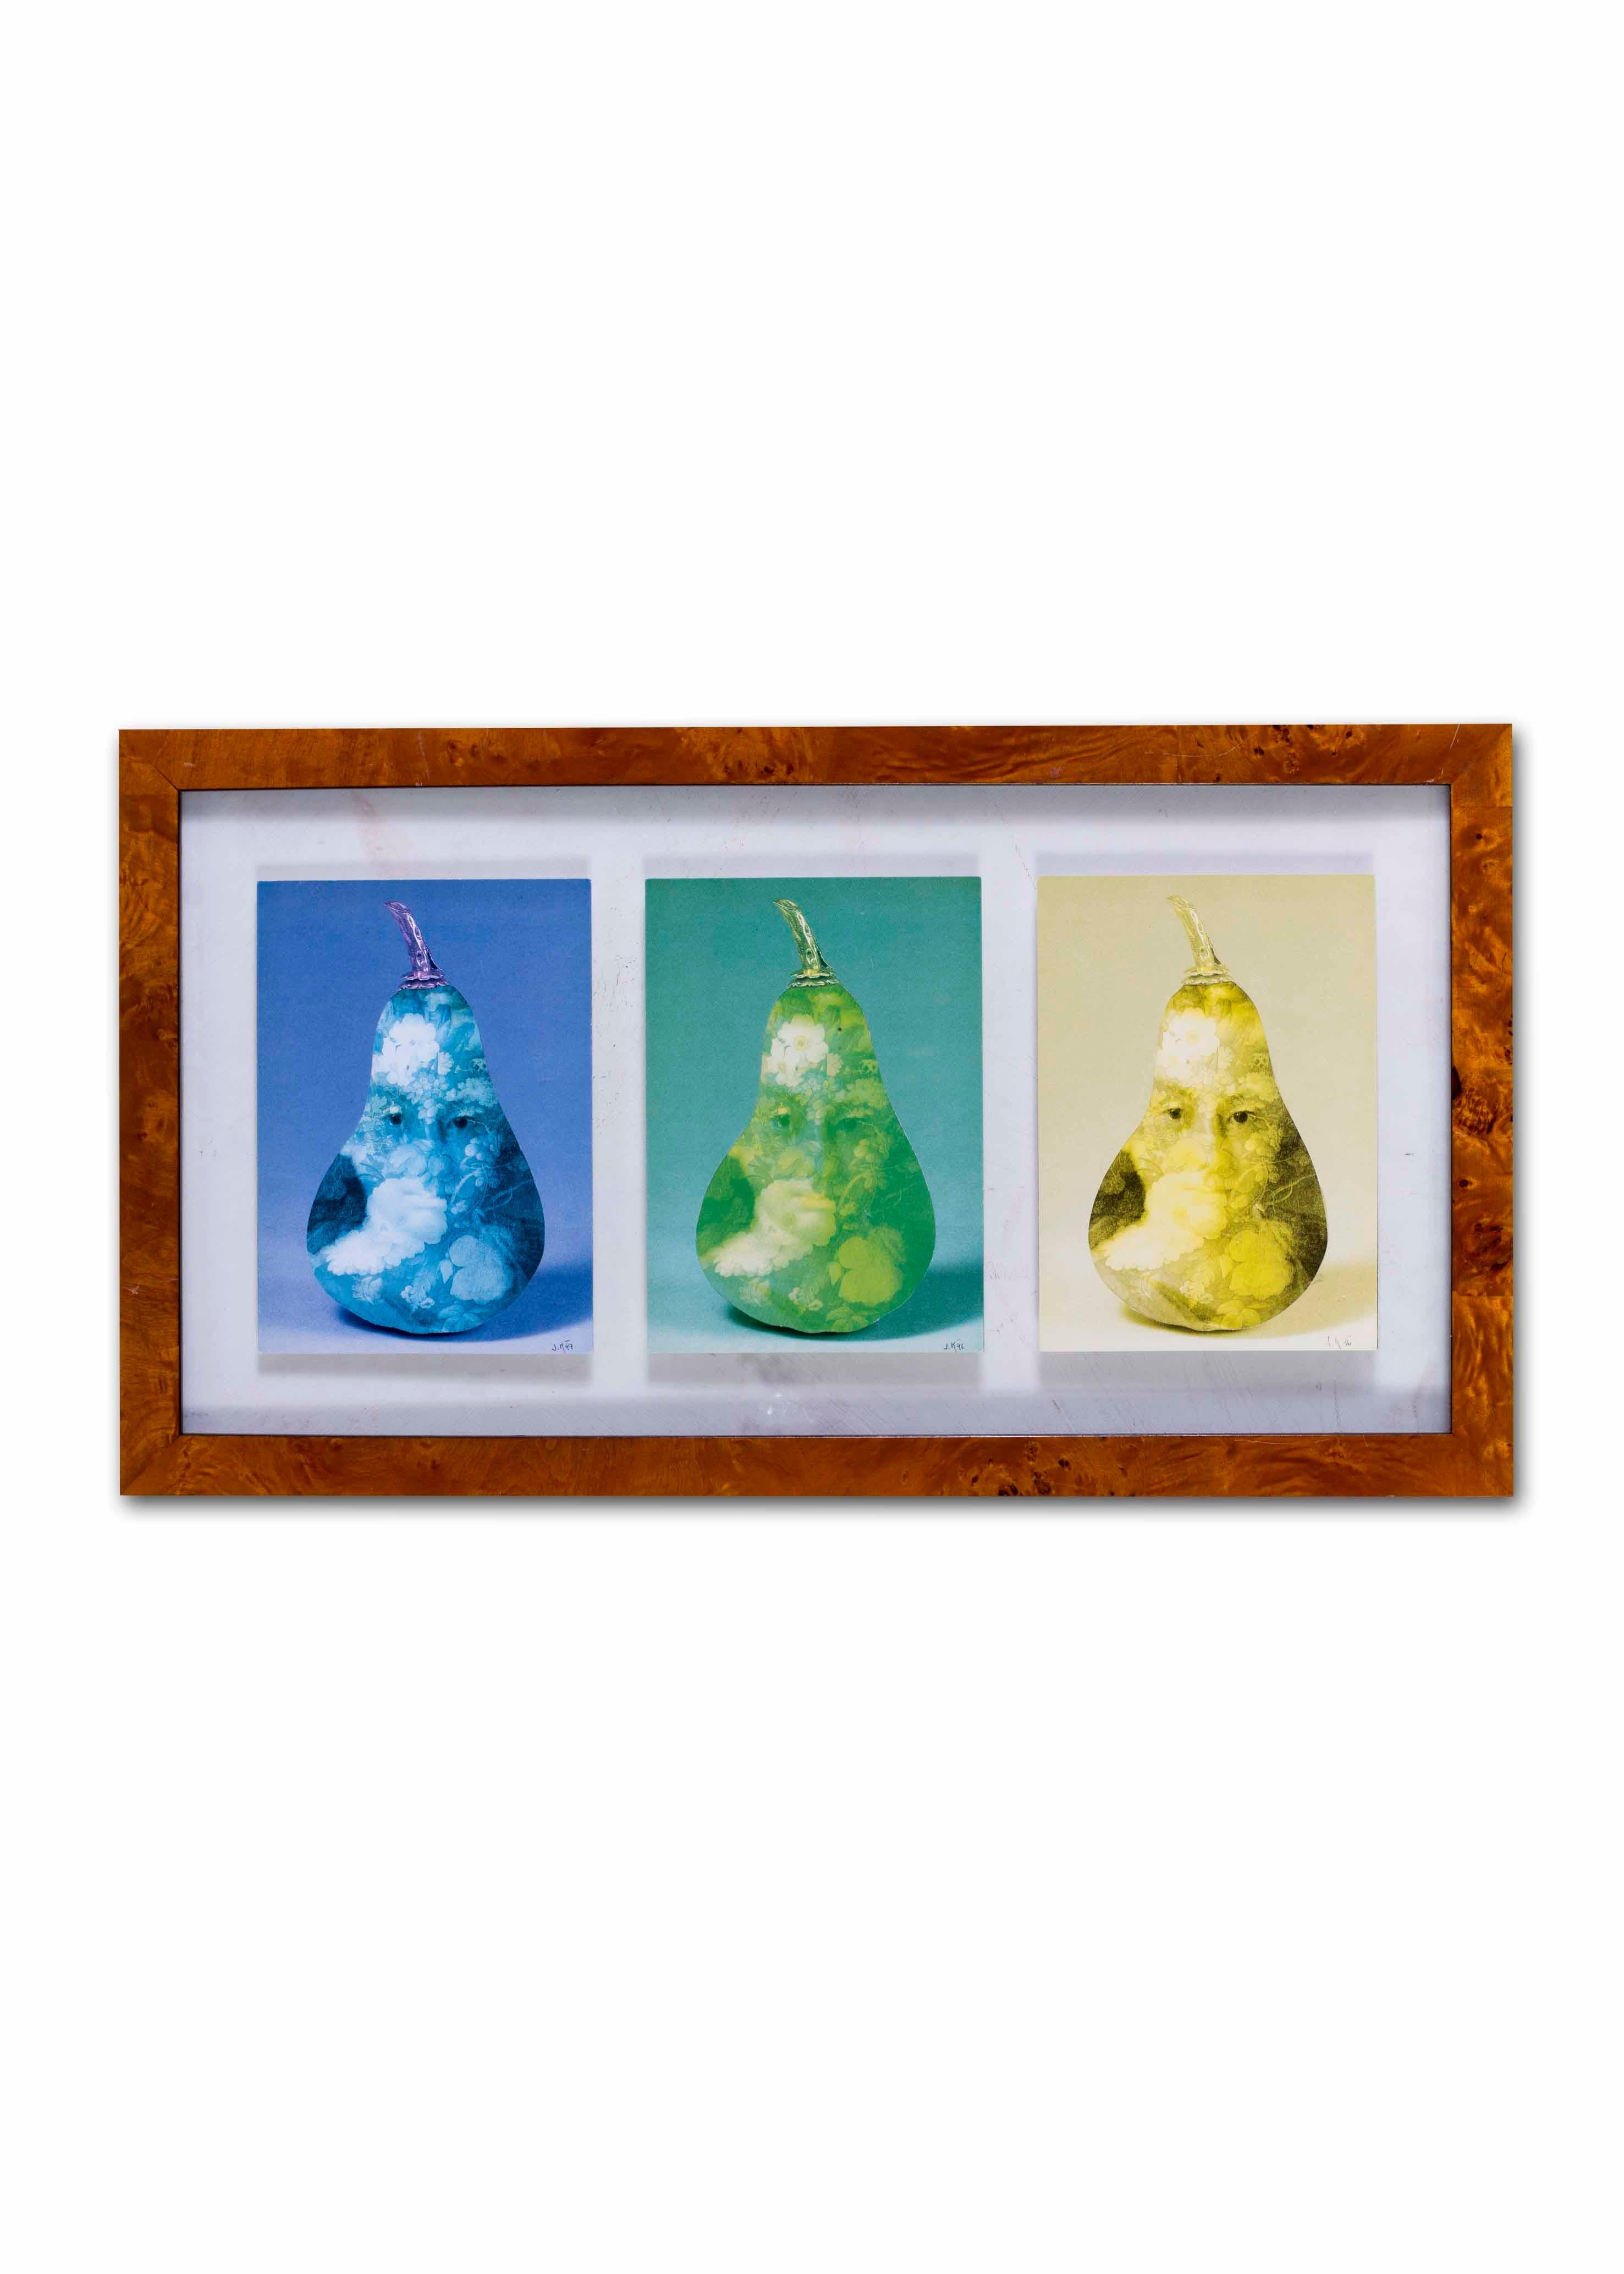 20th Czech Surrealist collage triptych of pears by Jiri Kolar For Sale 5